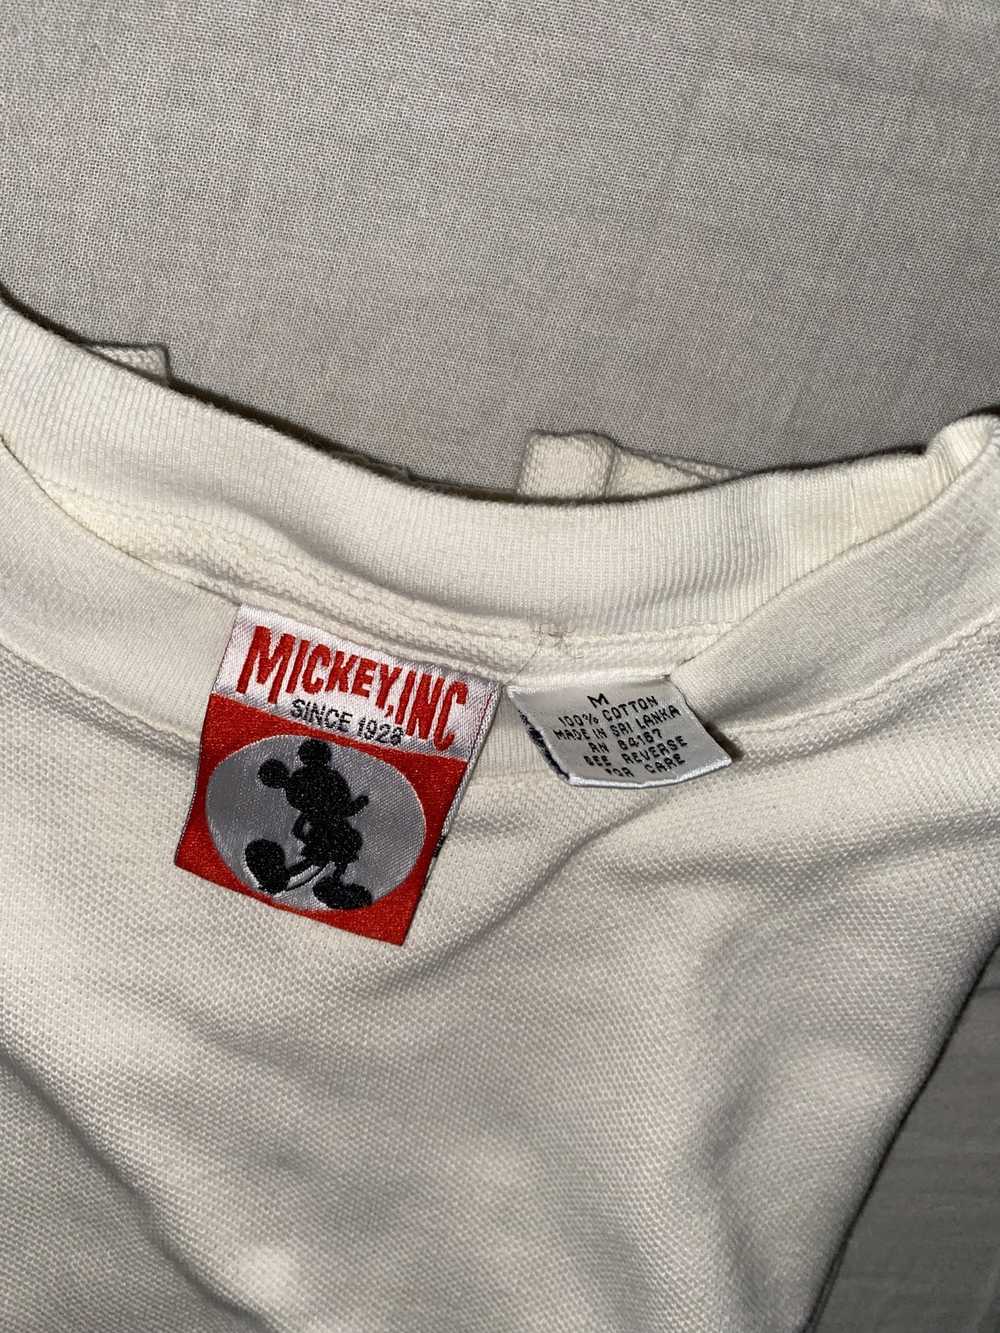 Mickey Inc Authentic Mickey Inc Vintage Cream T-S… - image 2